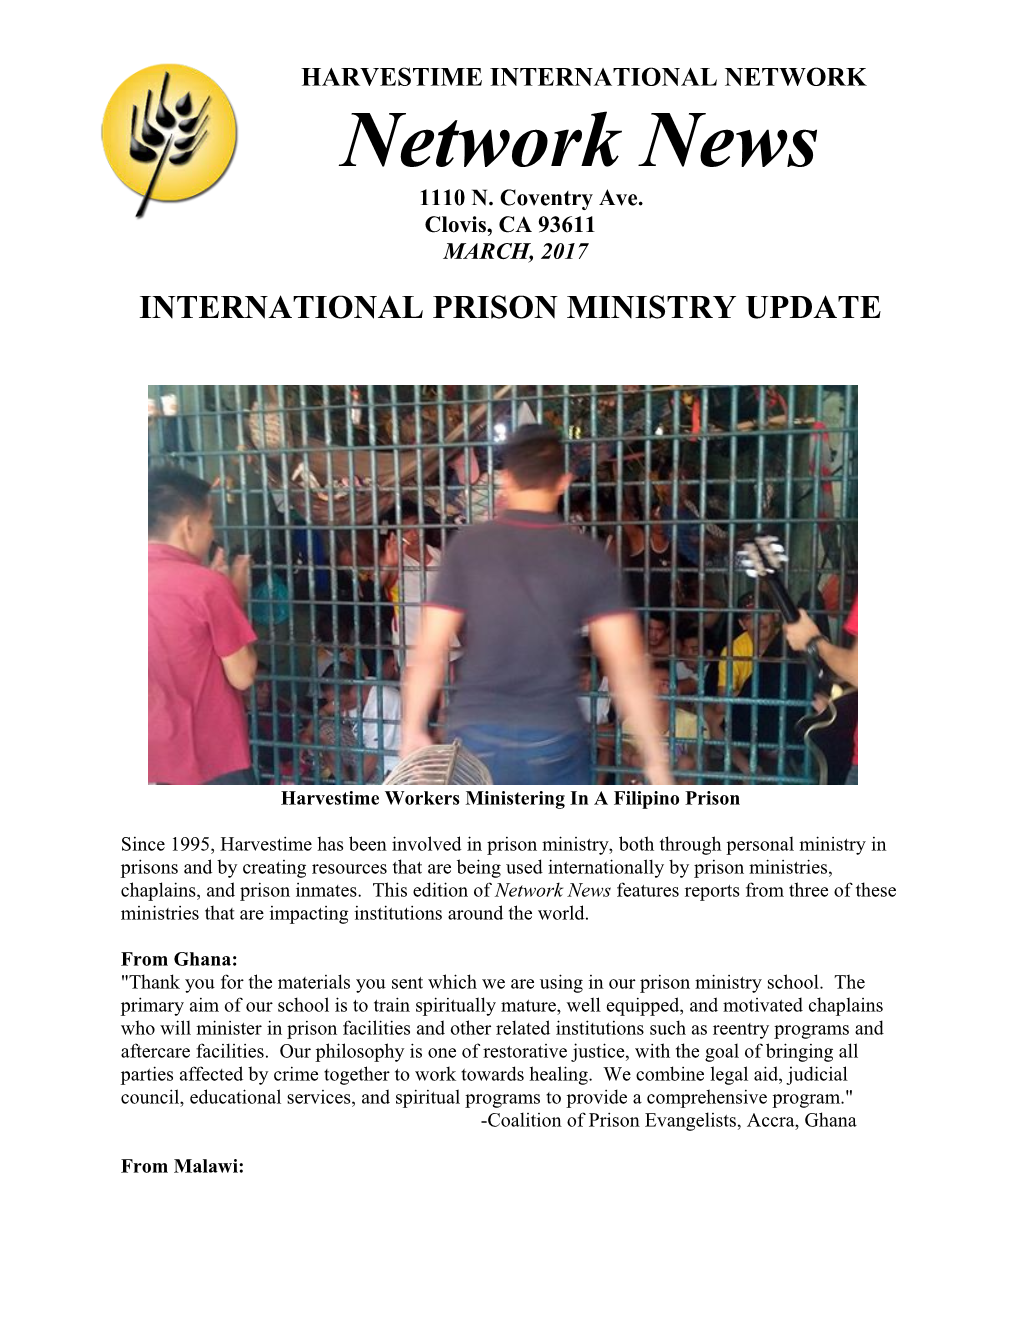 International Prison Ministry Update